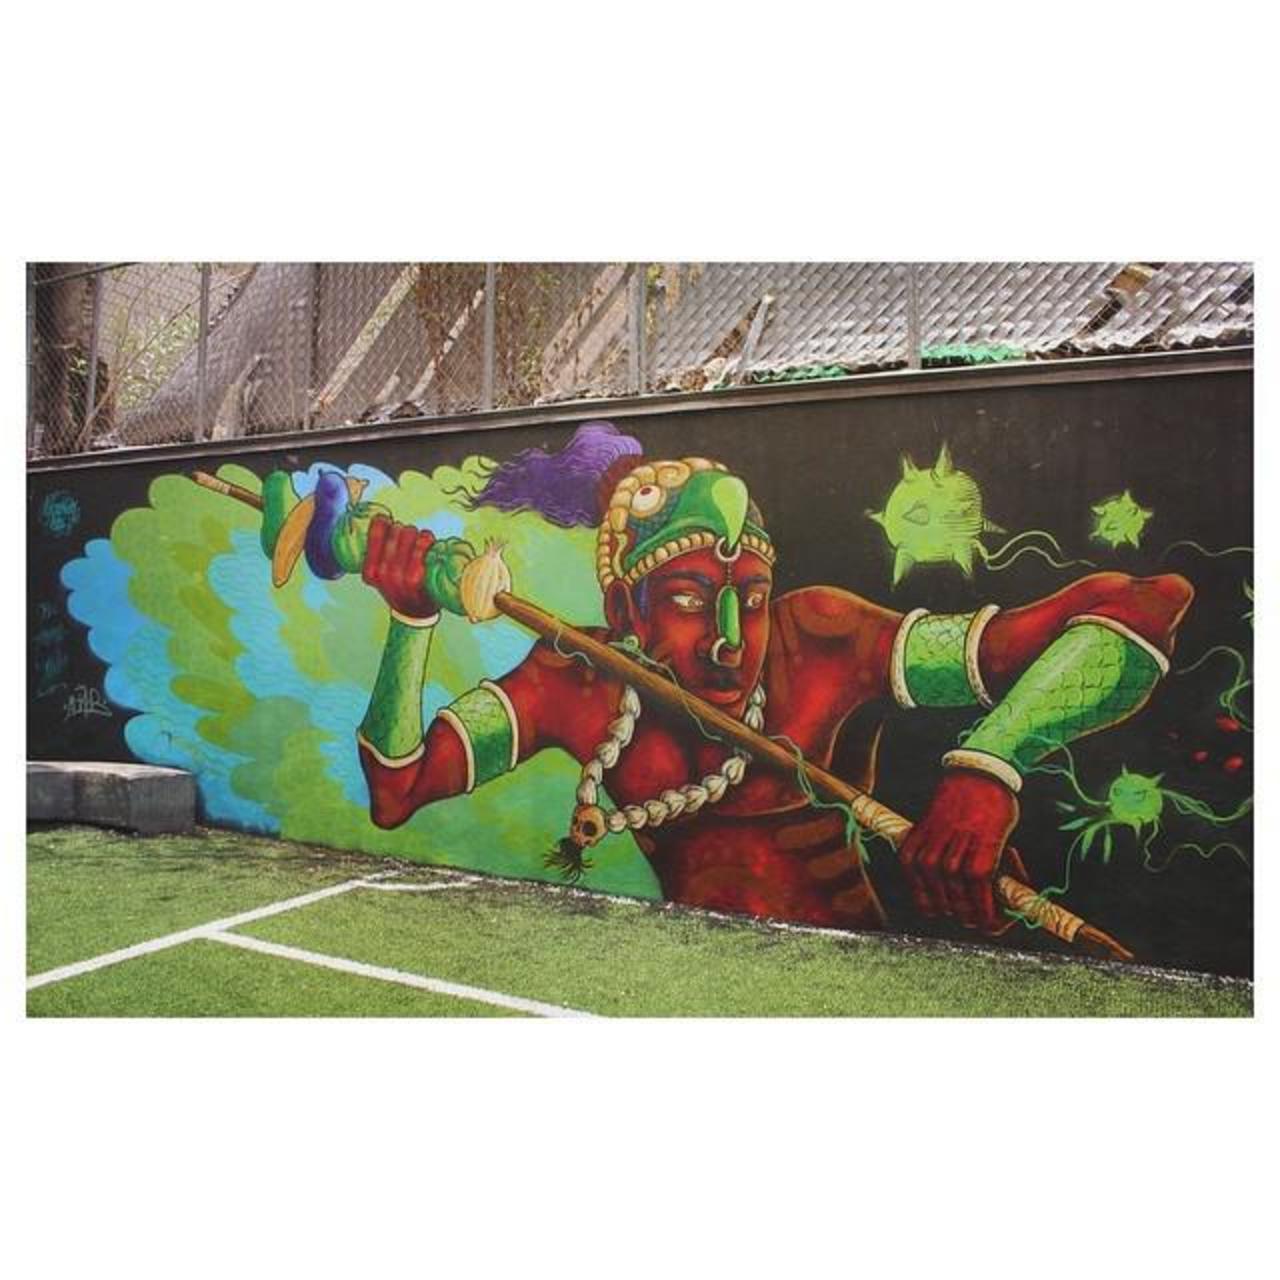 Red Warrior | #RaulUrias #Urban #UrbanArt #StreetArt #Art #Mural #Graffiti #Spray #StreetArtChilango #StreetArtMexi… http://t.co/YBITGibtab